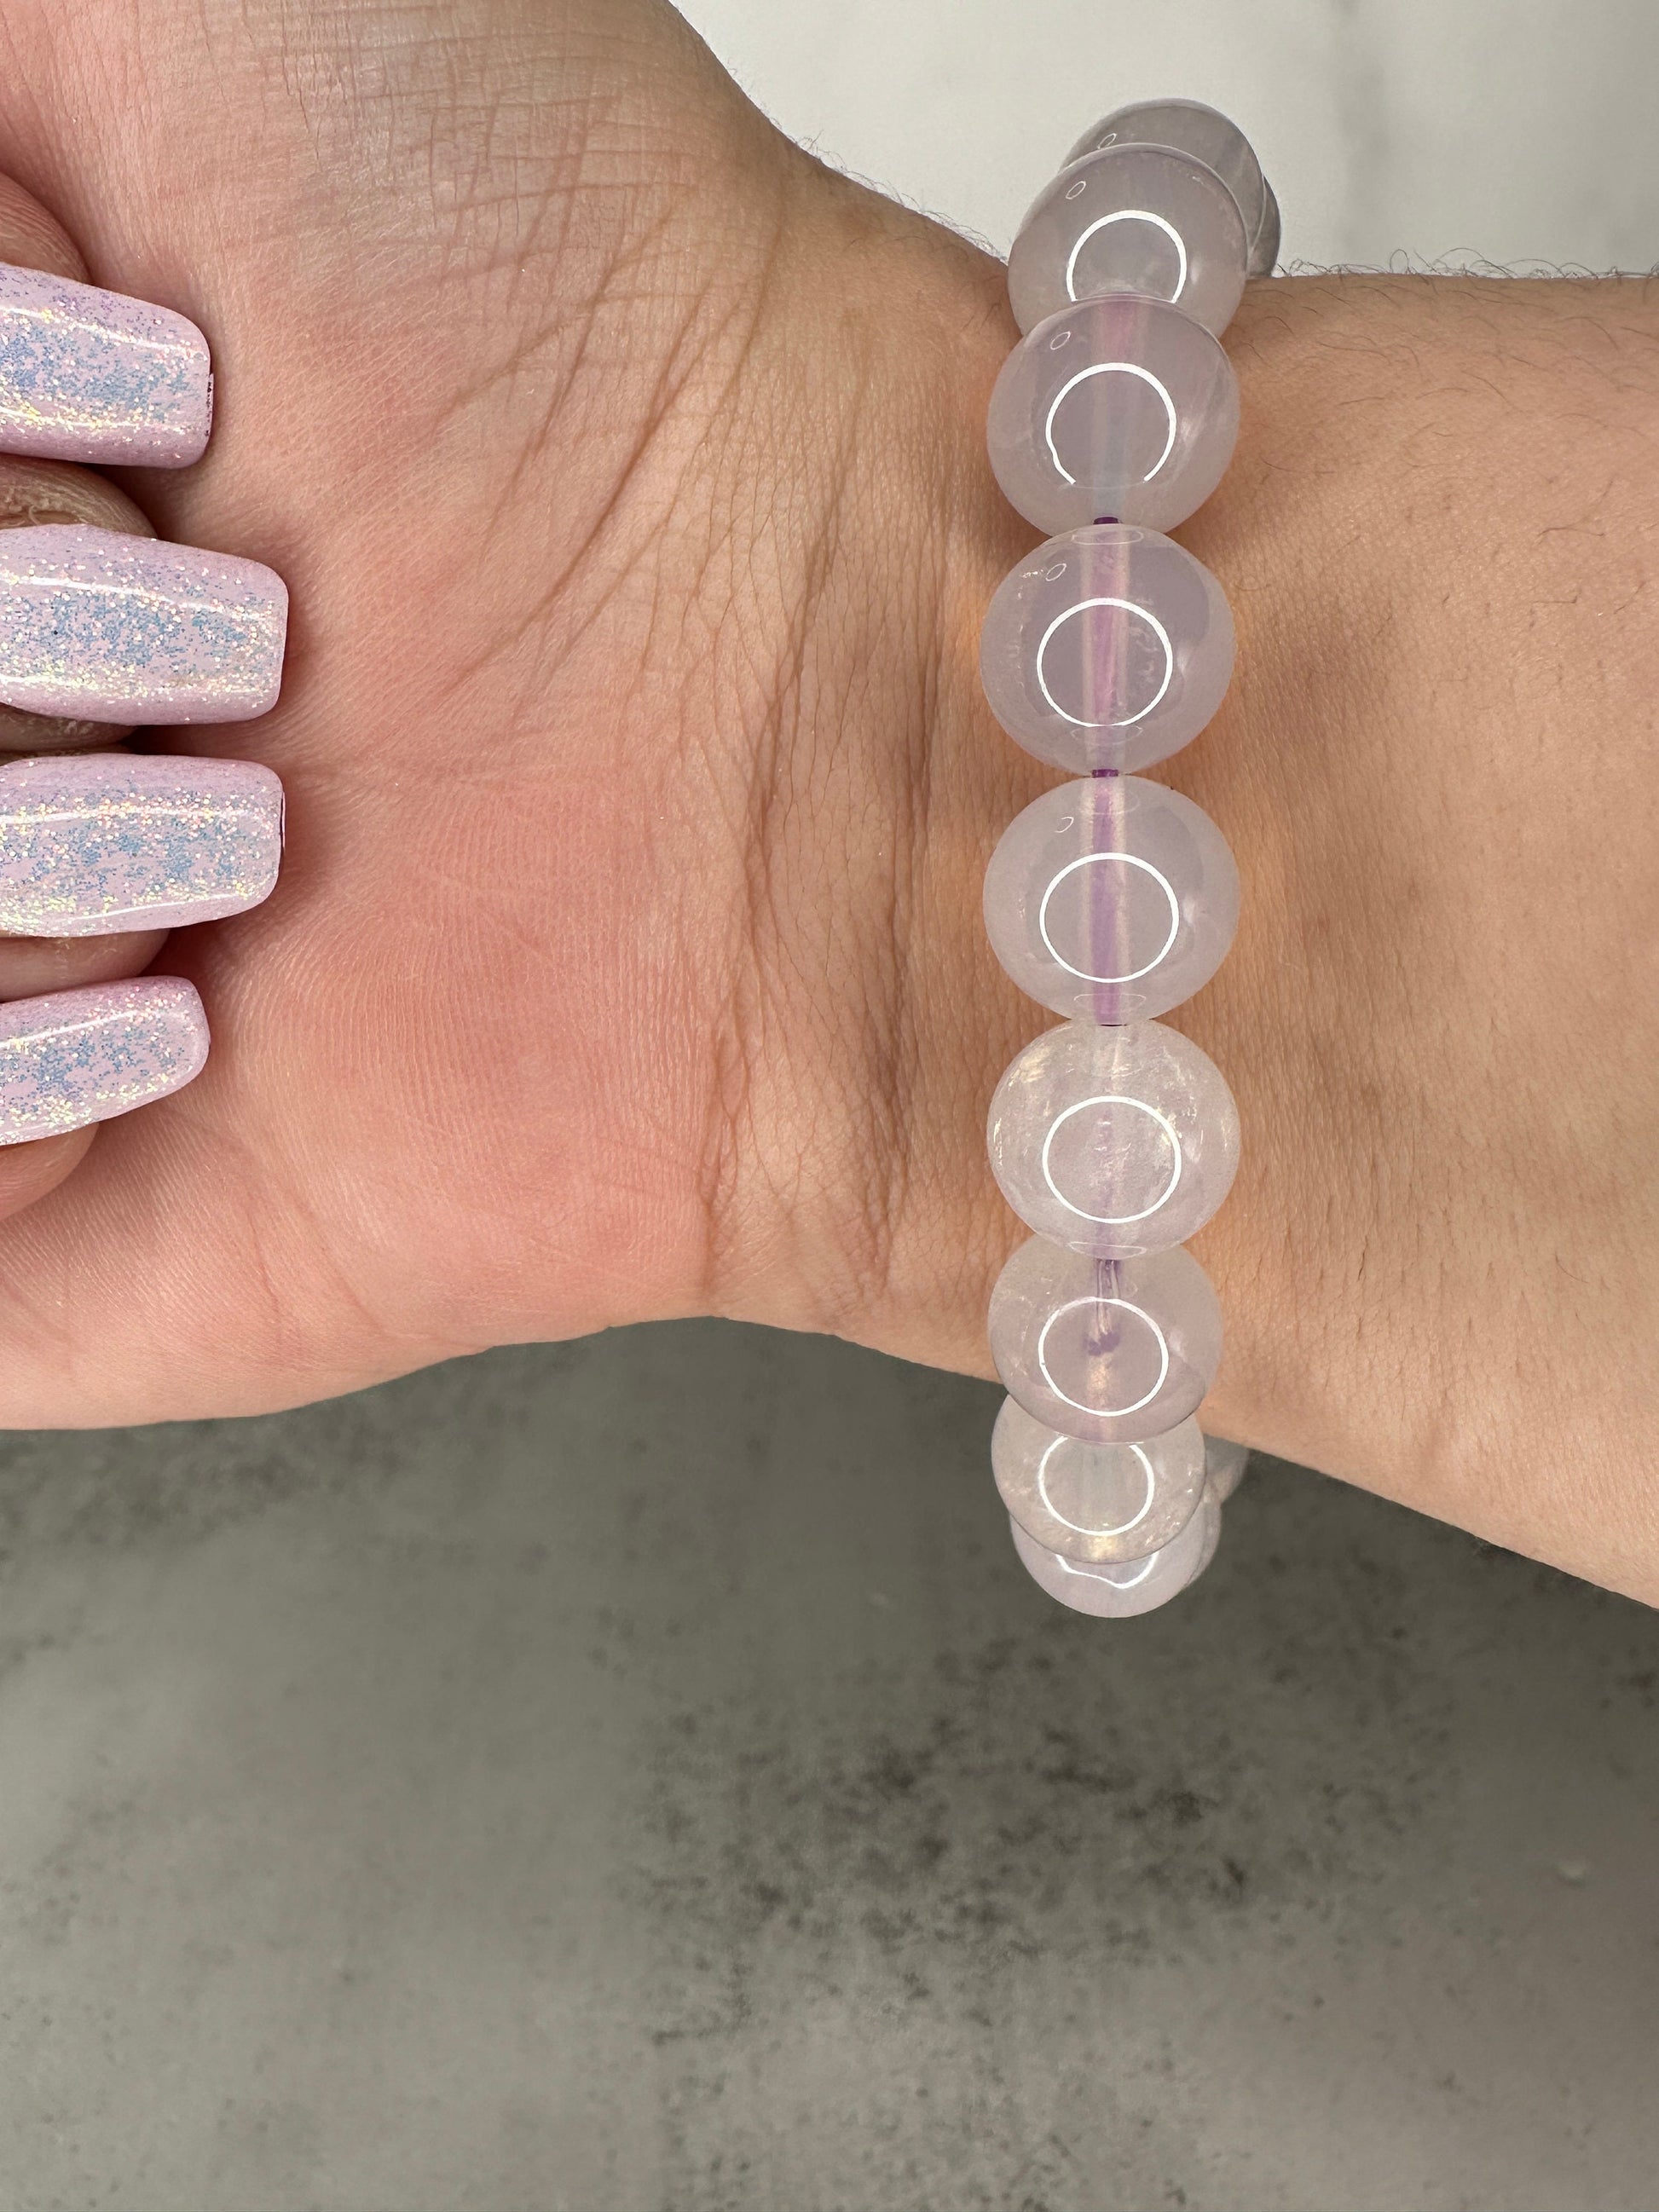 Gorgeous Lavender Moon Quartz Bracelet Genuine High-Quality Crystal With Girasol In 10.7mm